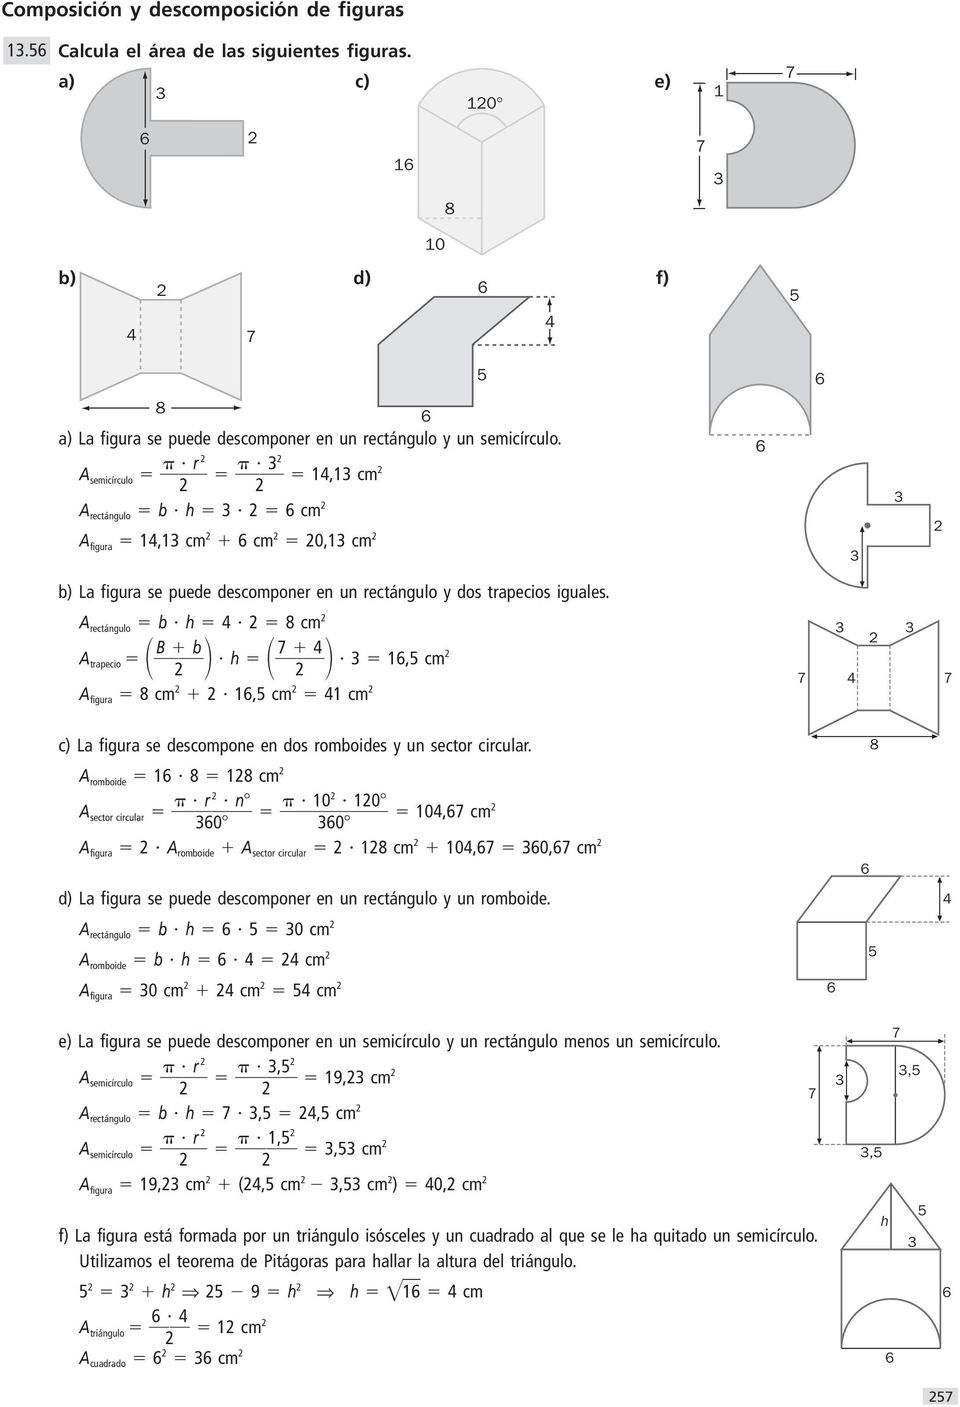 A rectángulo b h 8 cm A trapecio B b h 7 1,5 cm A figura 8 cm 1,5 cm 1 cm 7 7 c) La figura se descompone en dos romboides y un sector circular.